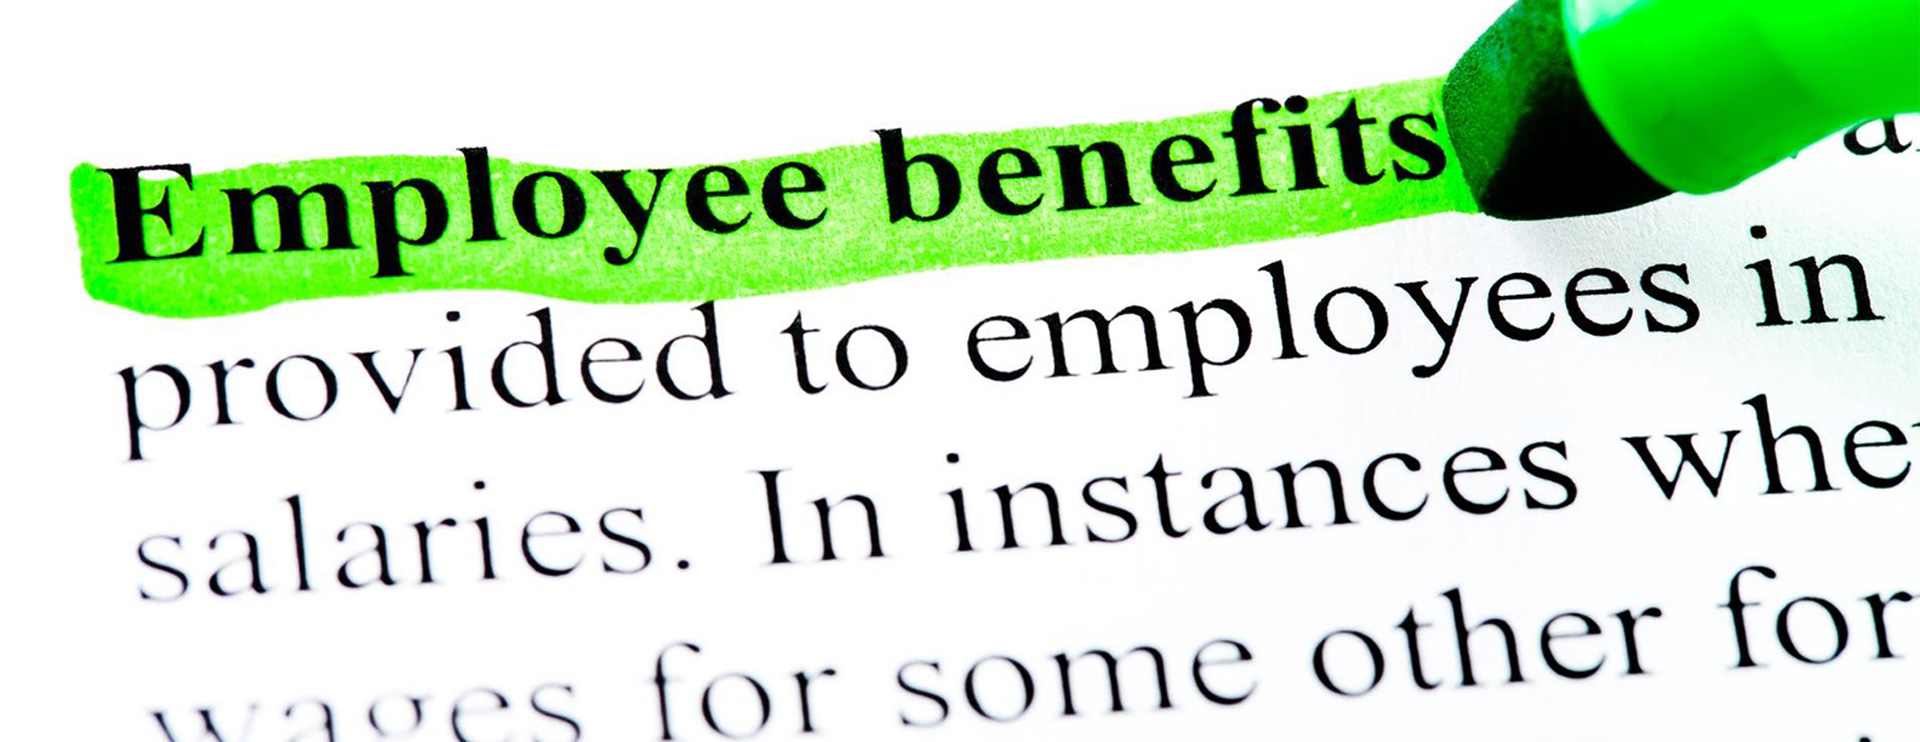 AHS-AHS Contractor and Employee Benefits